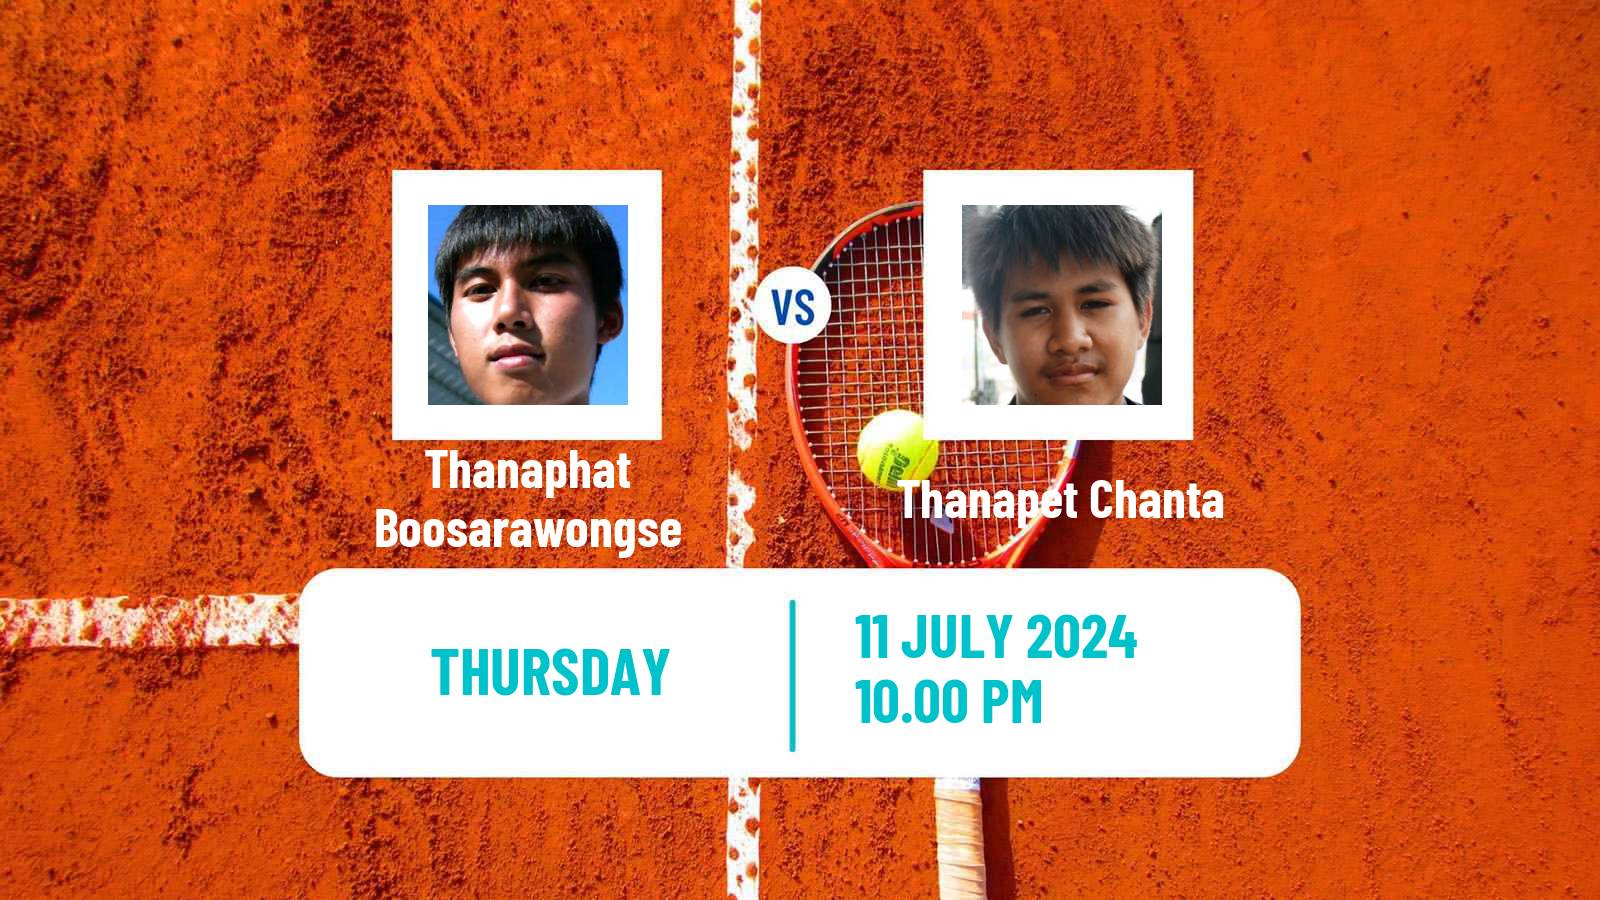 Tennis ITF M15 Nakhon Si Thammarat 5 Men Thanaphat Boosarawongse - Thanapet Chanta